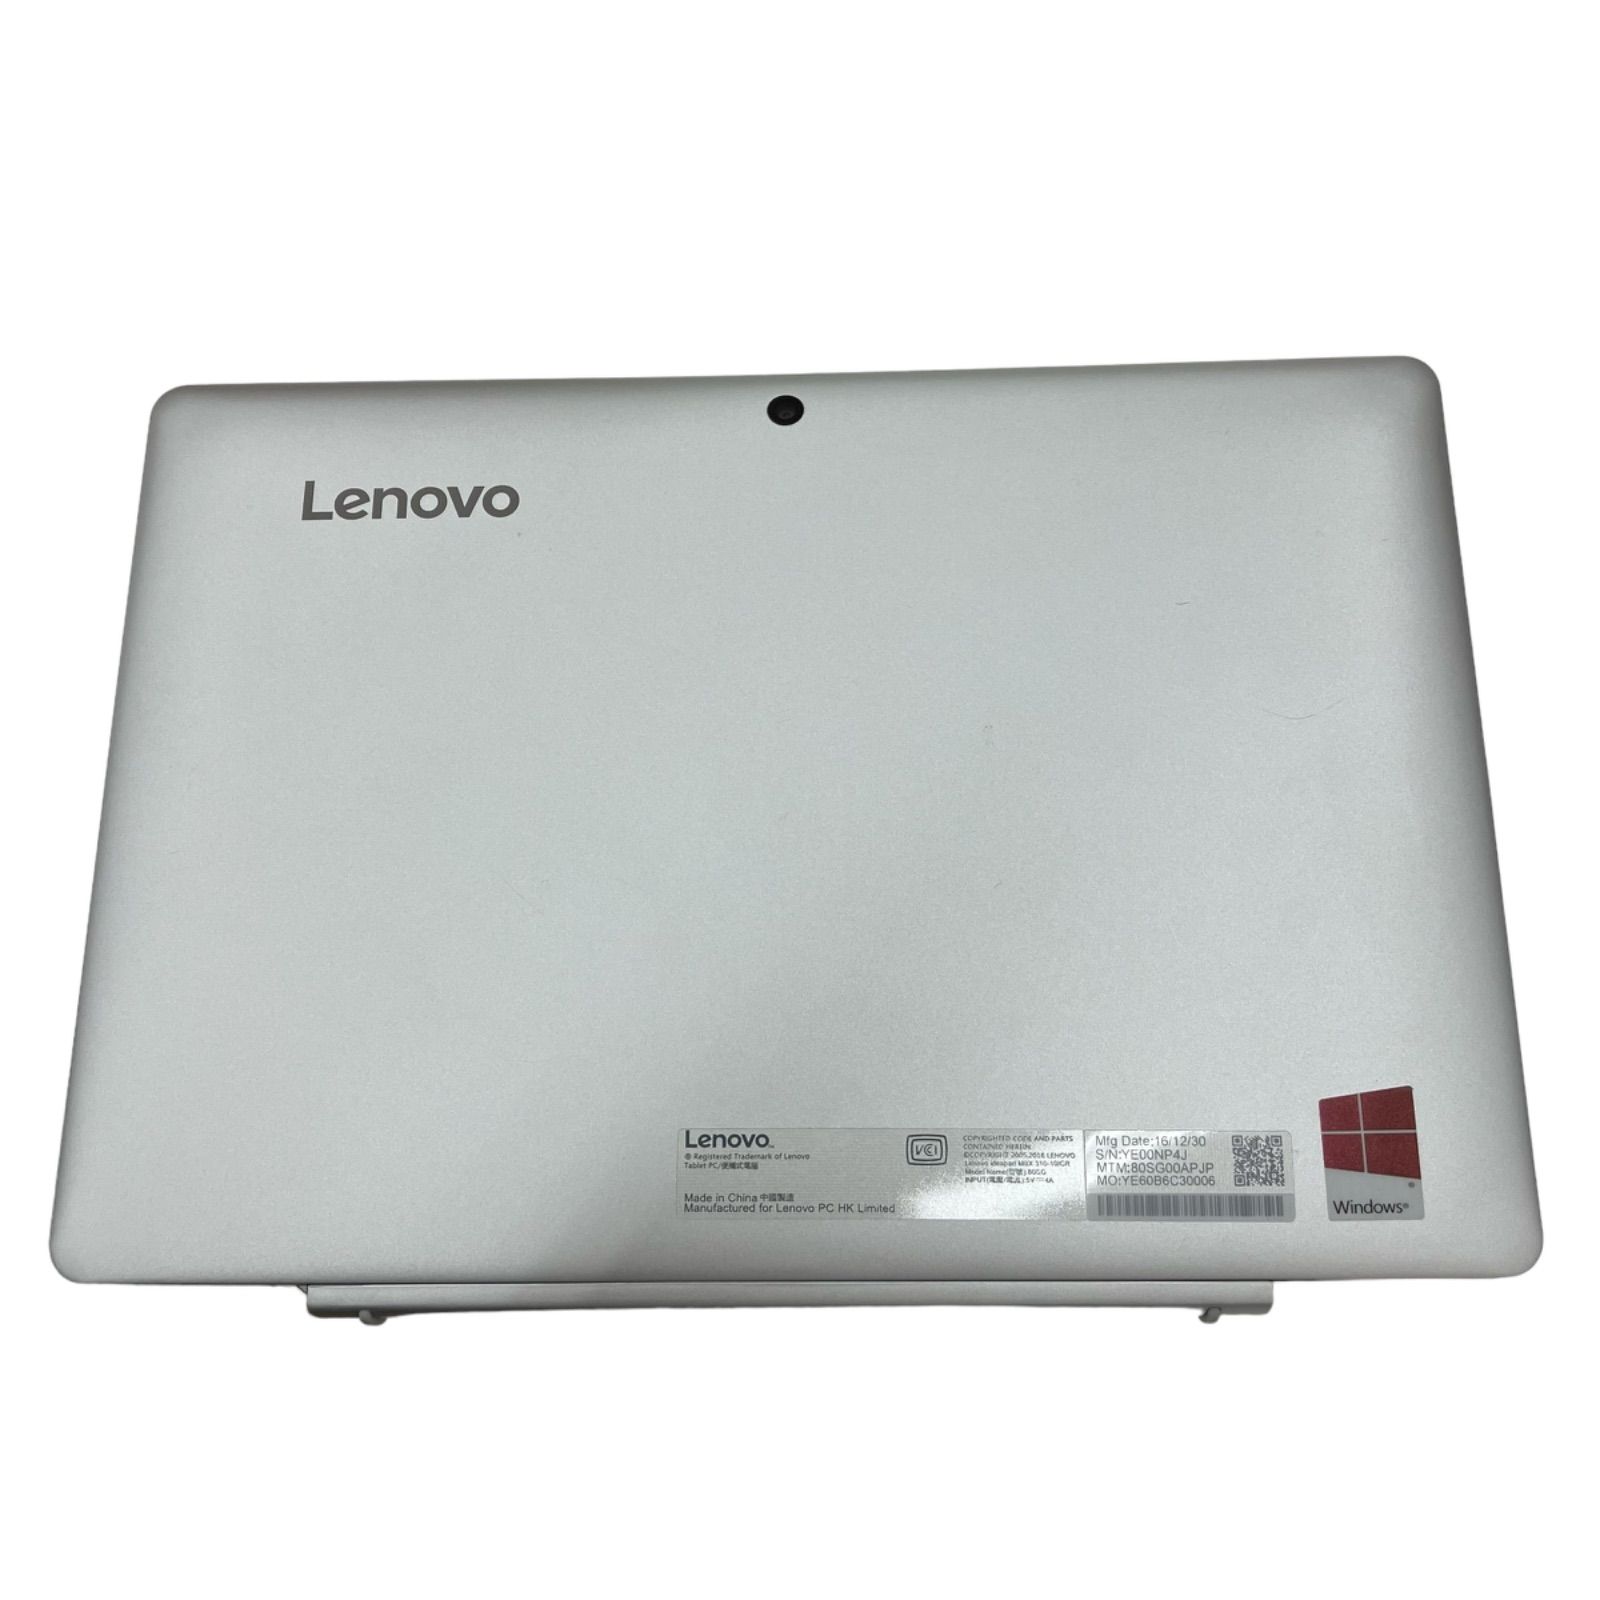 Lenovo 80SG00APJP レノボIdeaPad Miix310